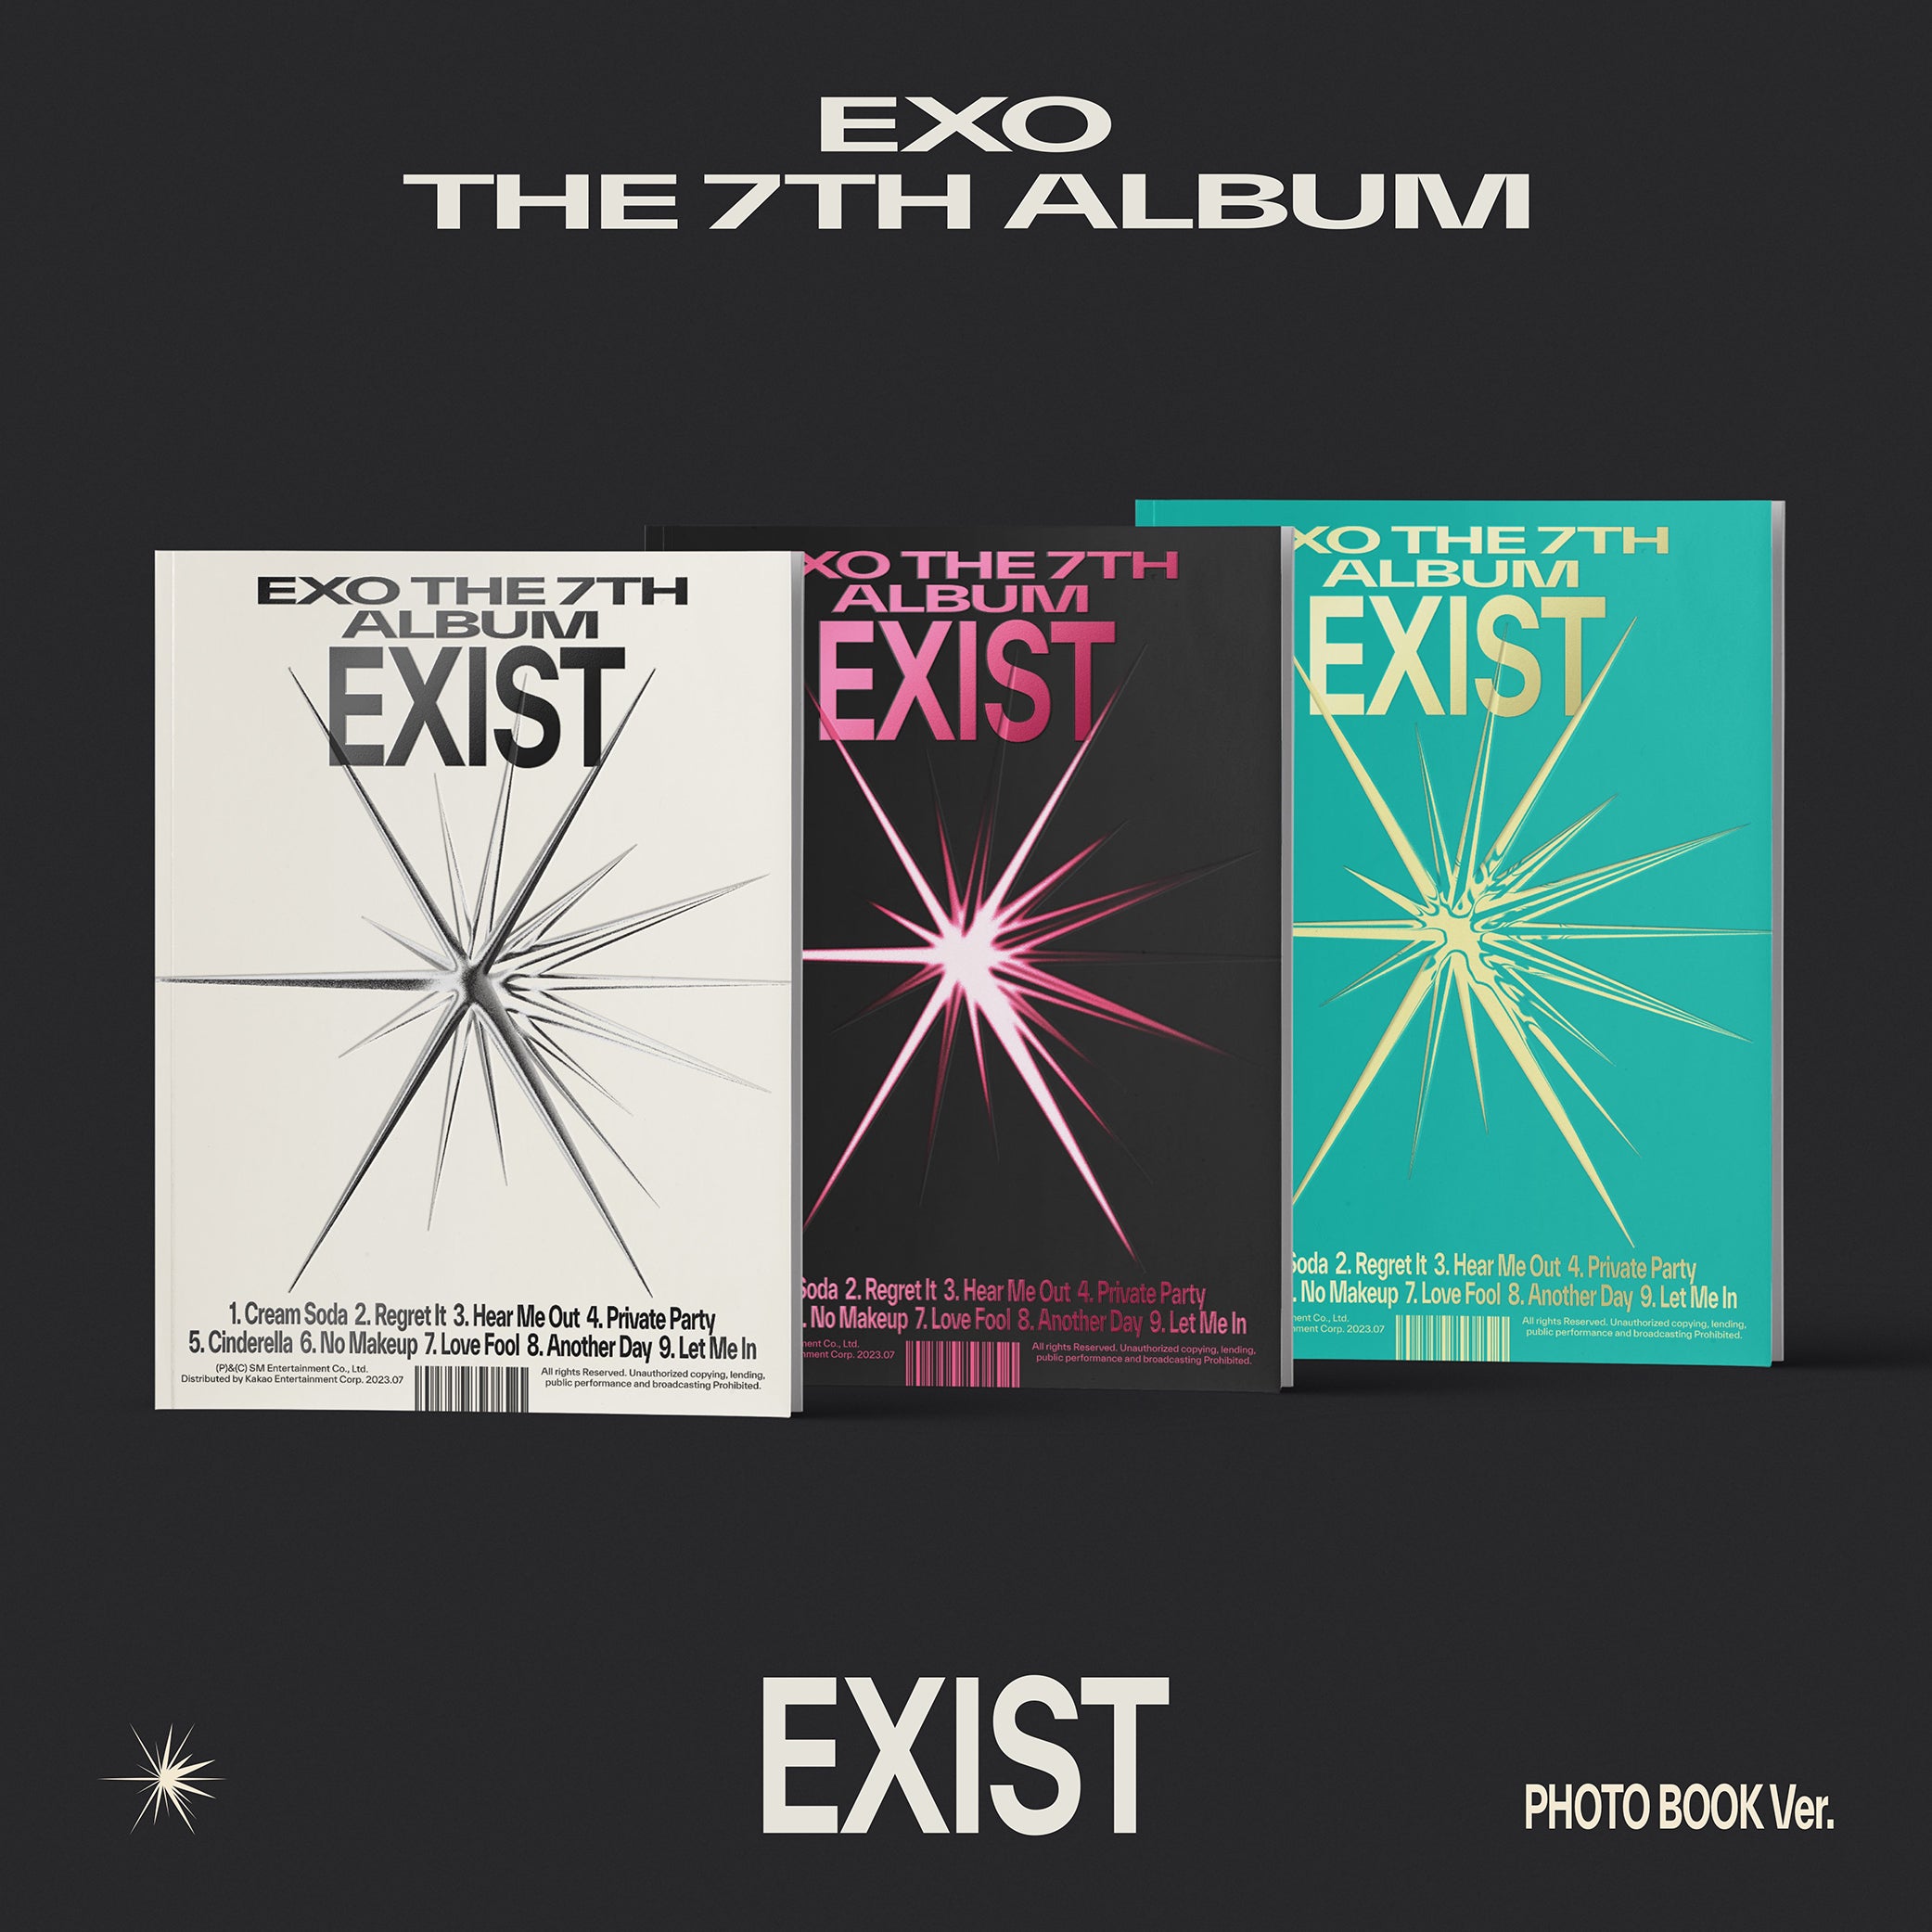 The 7th Album 'EXIST' (Photo Book Ver.) - Random